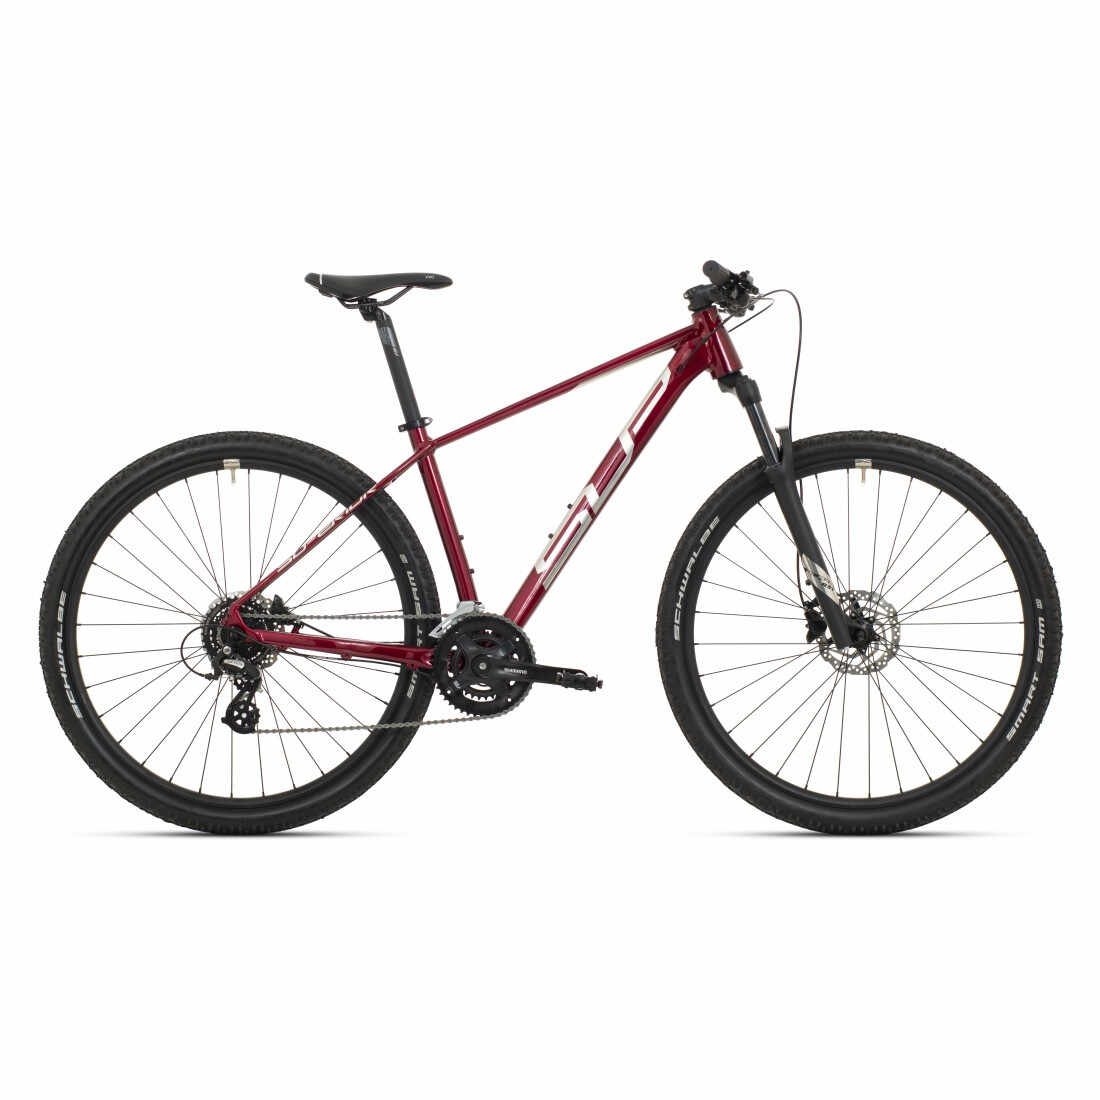 Bicicleta Superior XC 819 29 Gloss Dark Red Silver 18.0 - (M)